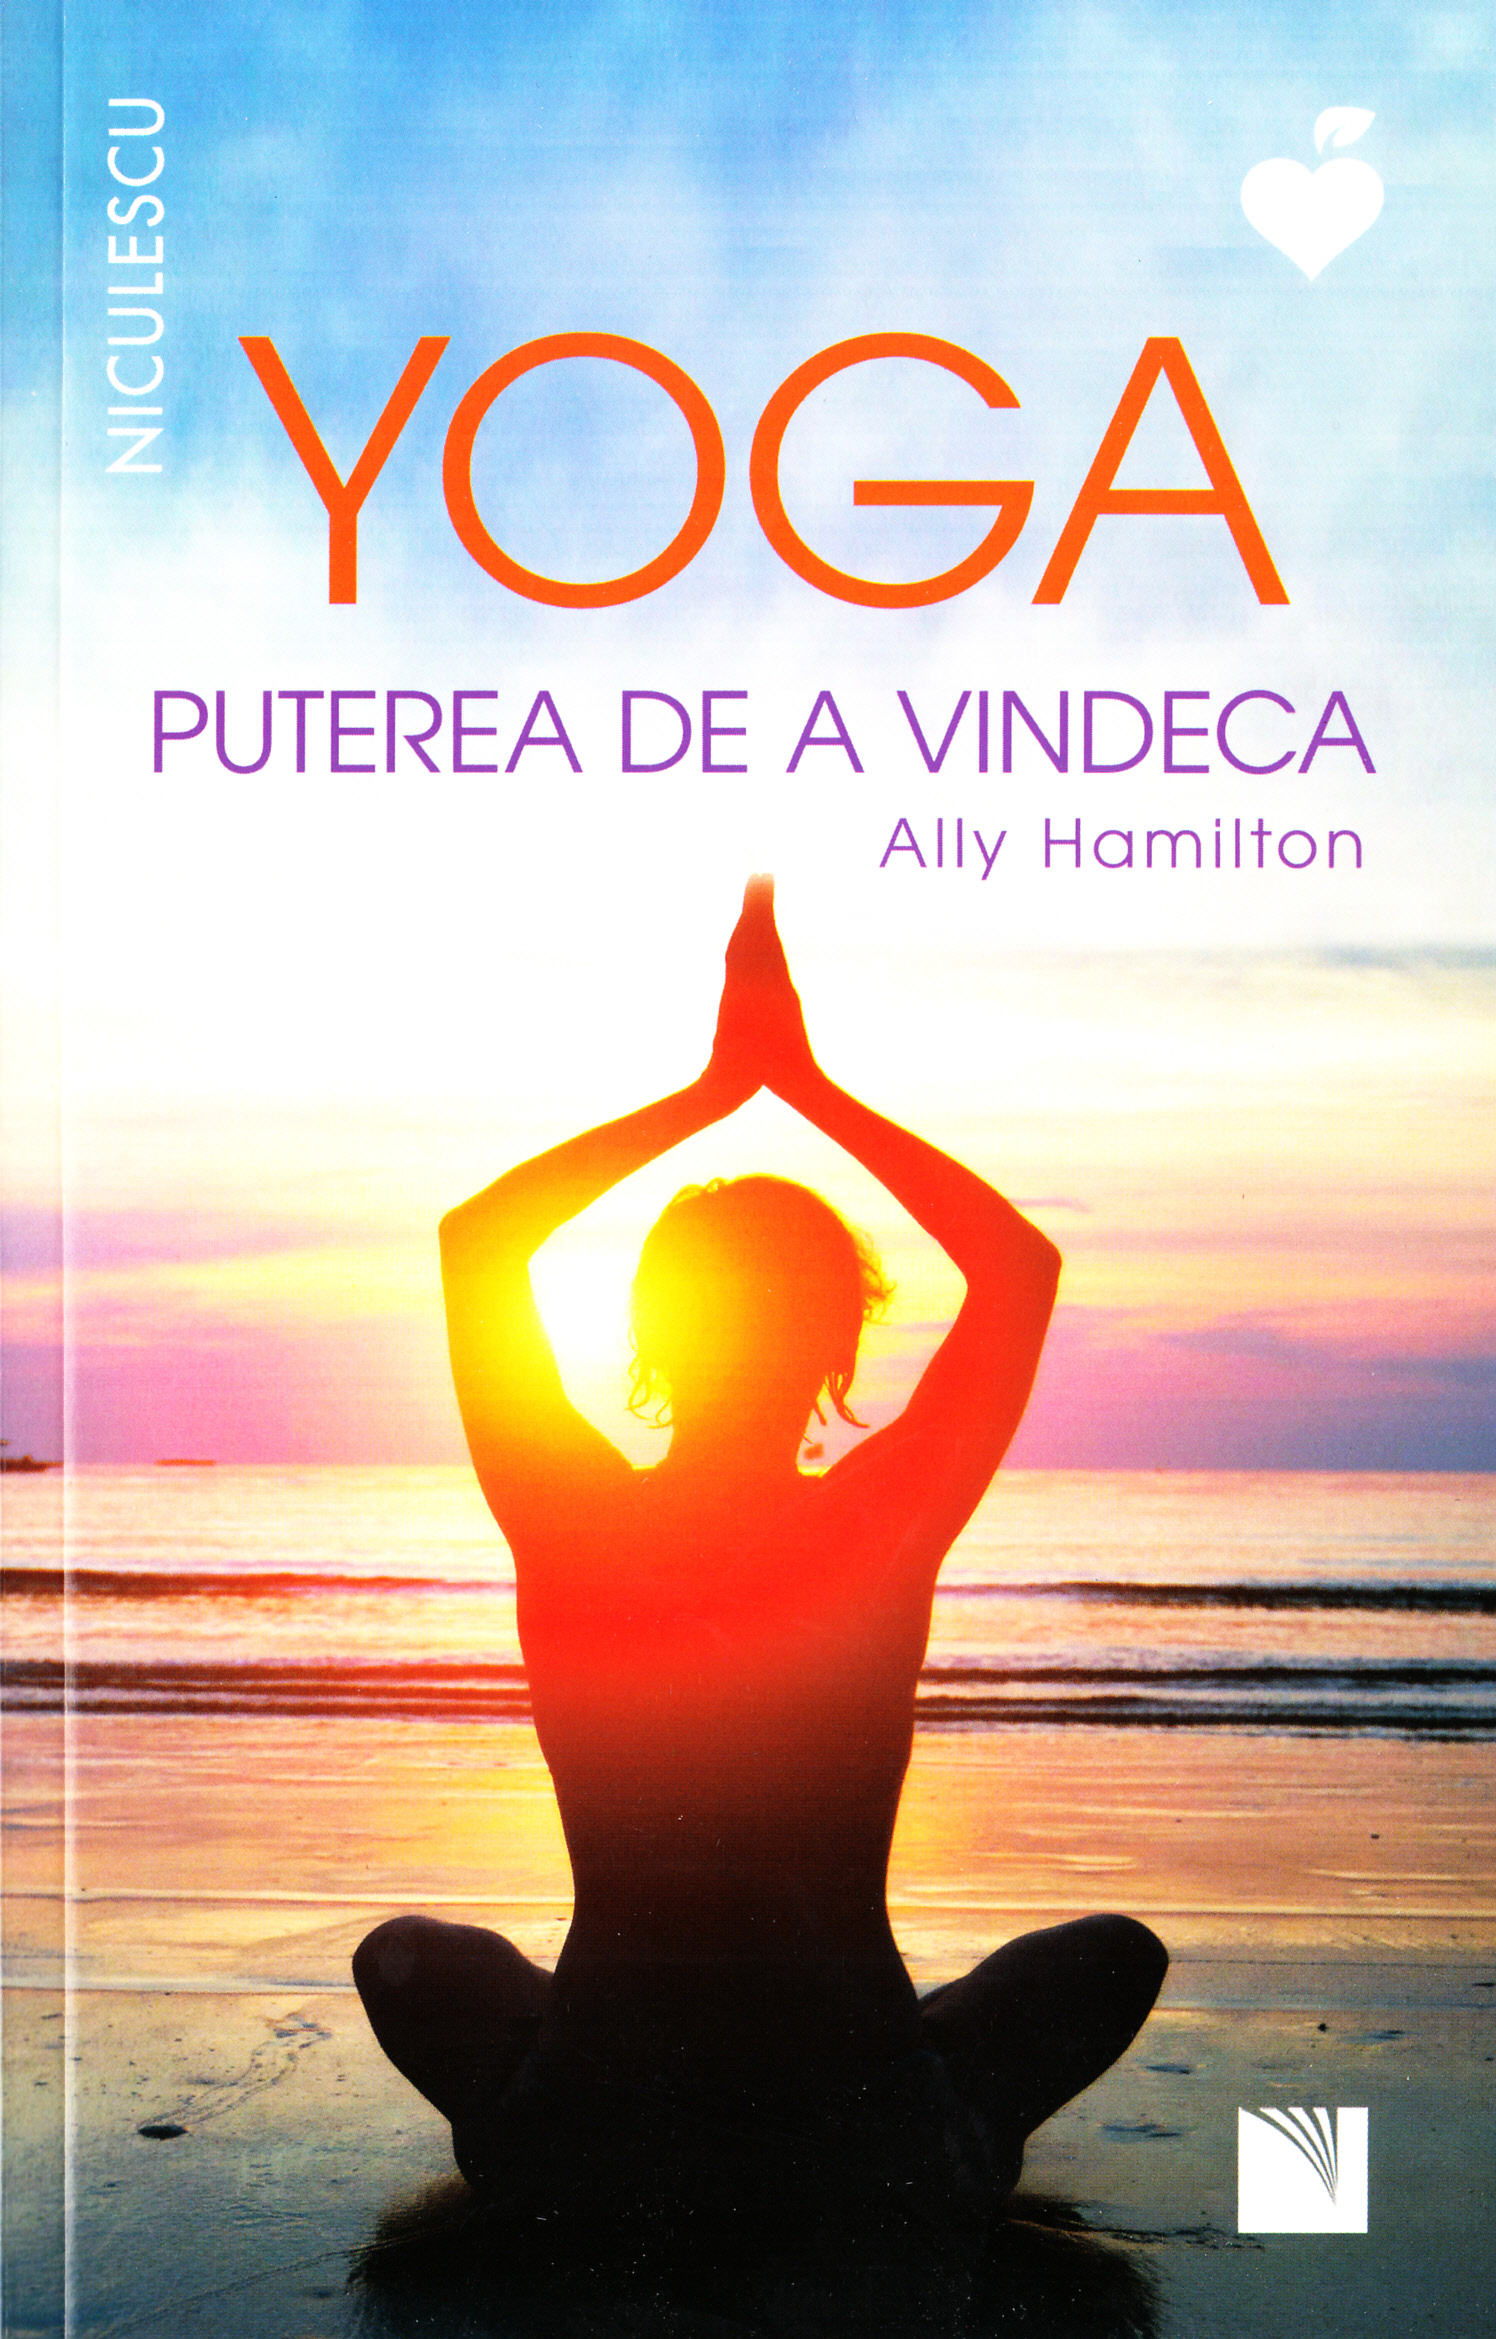 Yoga, puterea de a vindeca - Ally Hamilton